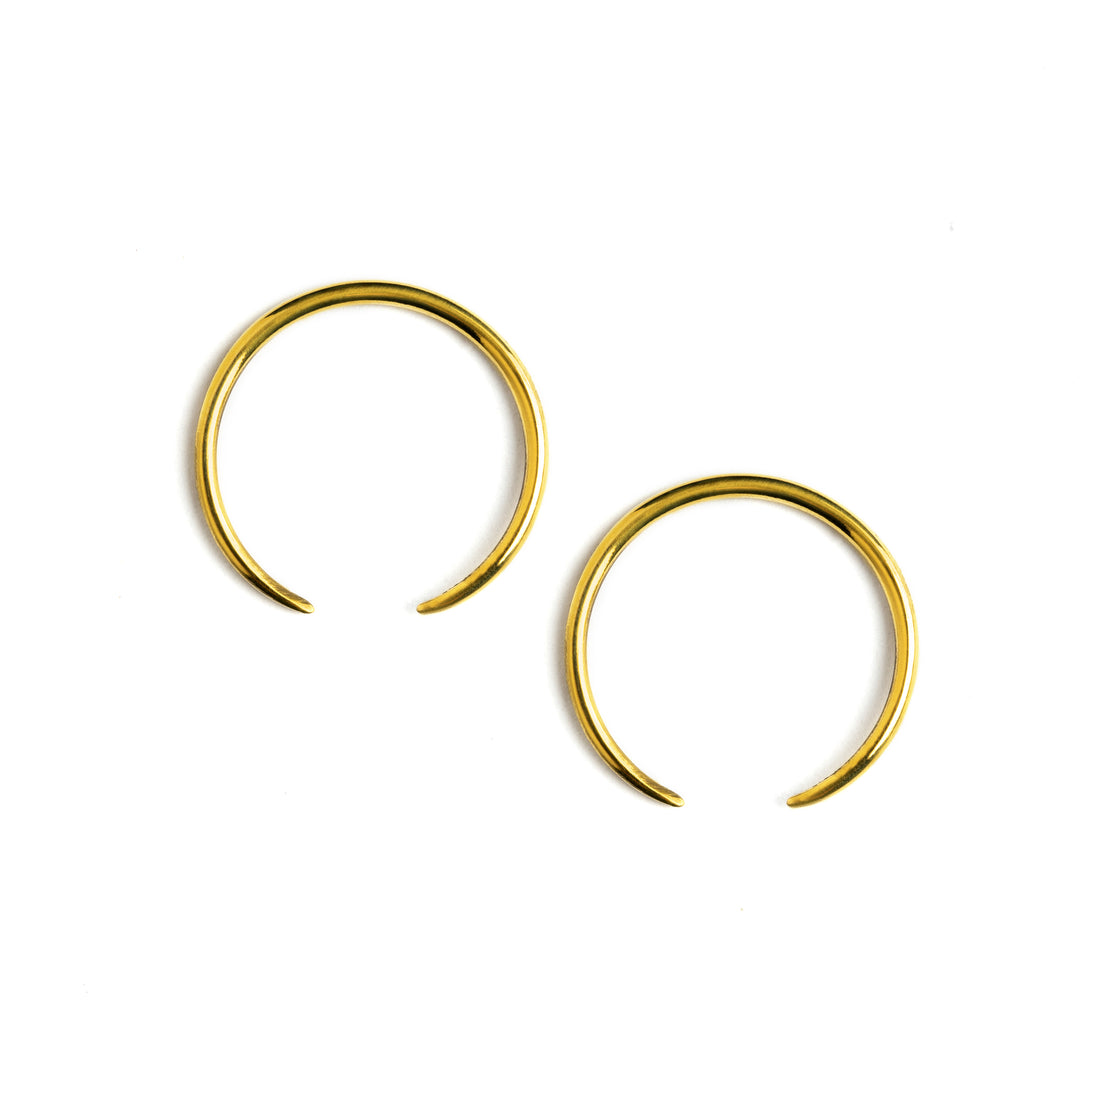 pair of golden brass wire horseshoe earrings side view